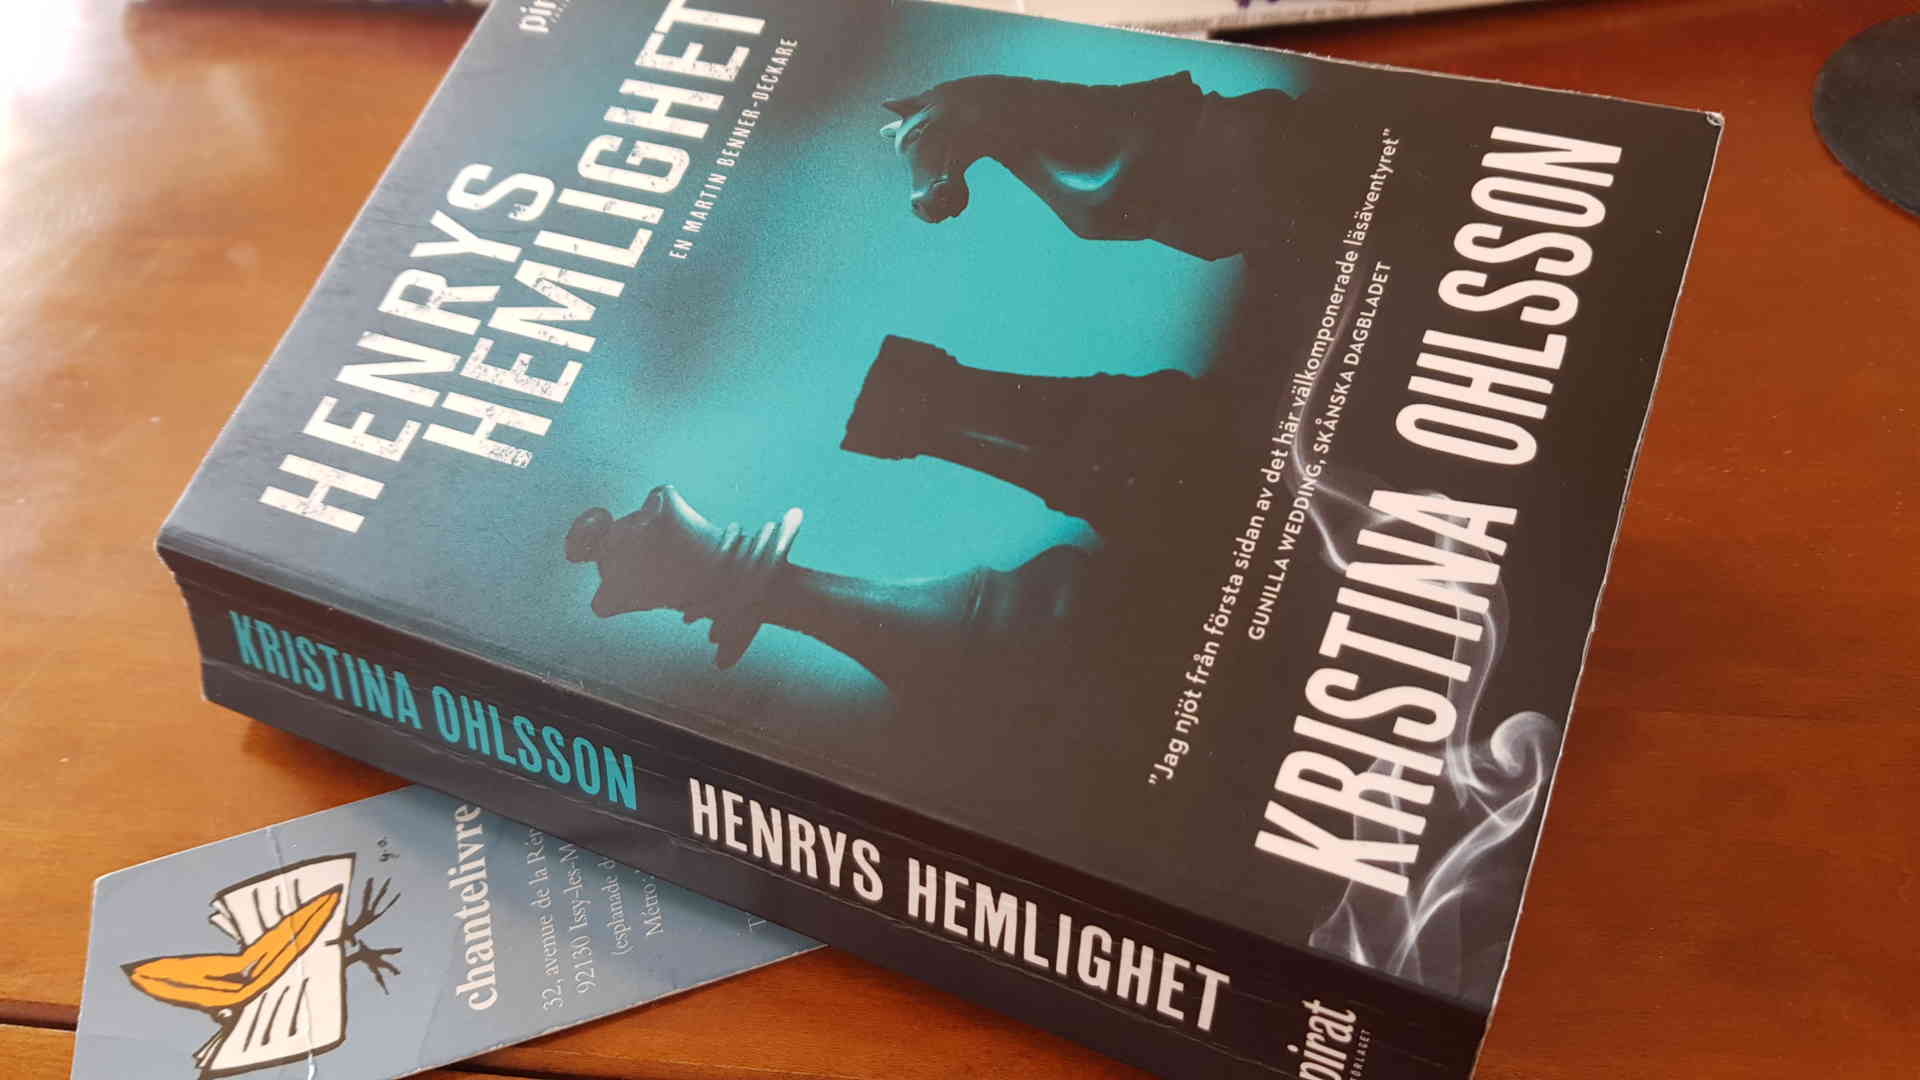 Henrys hemlighet, av Kristina Ohlsson